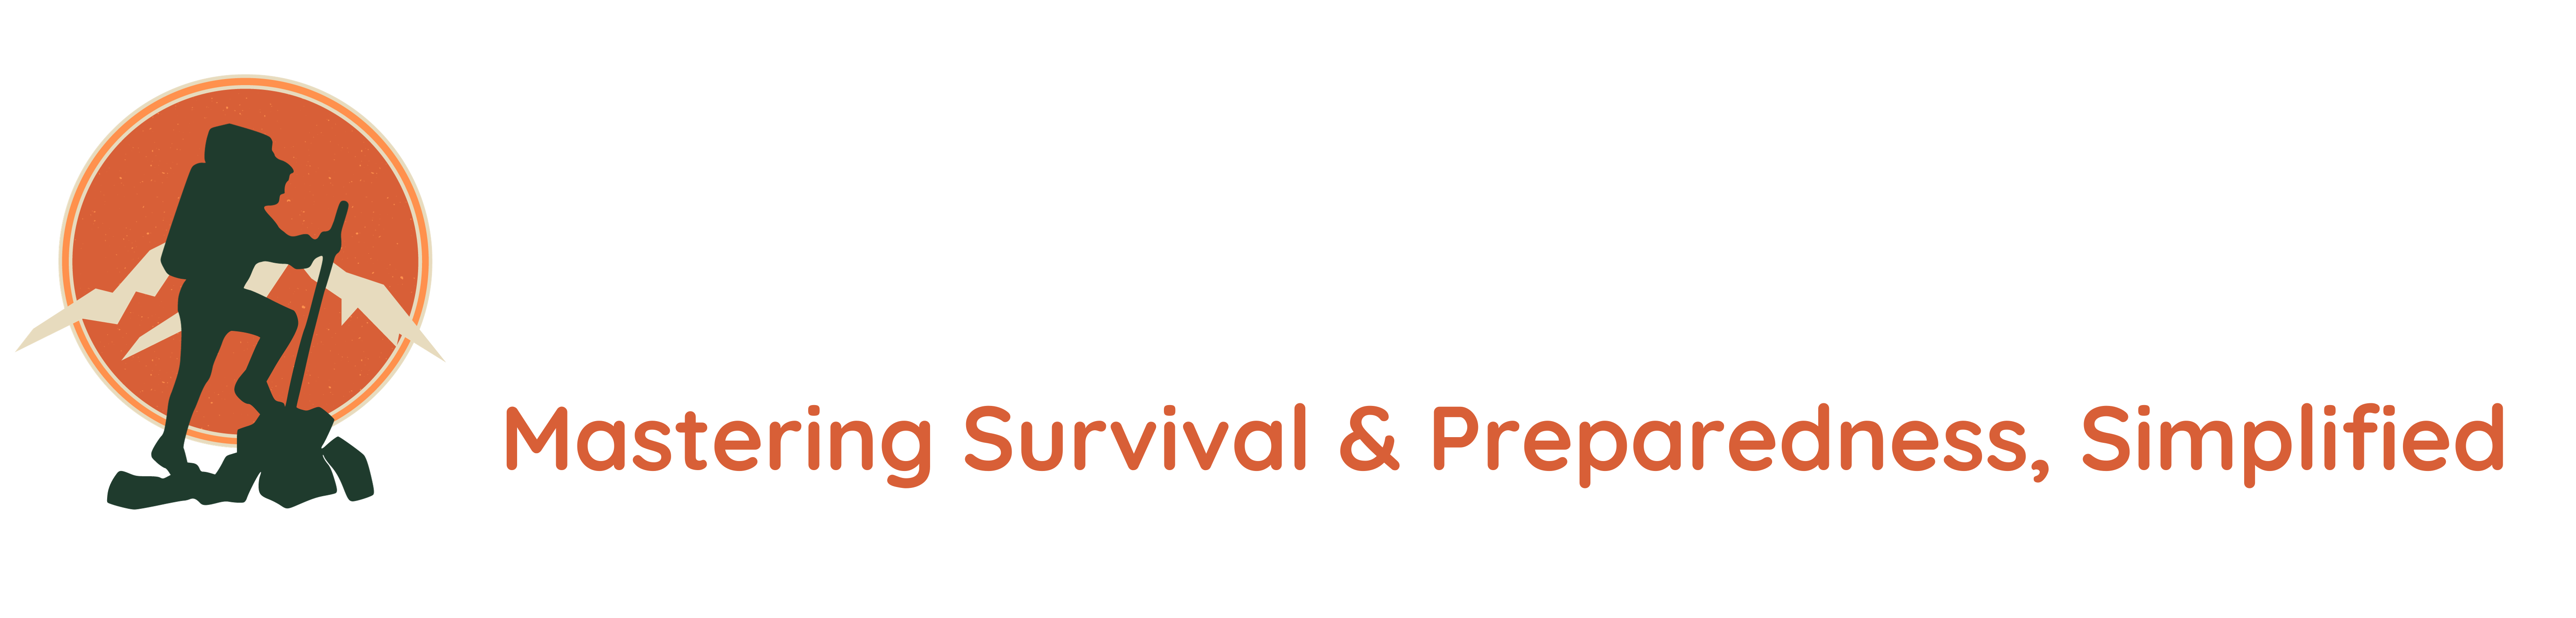 SurviveExpert: Essential Survival & Preparedness Tips